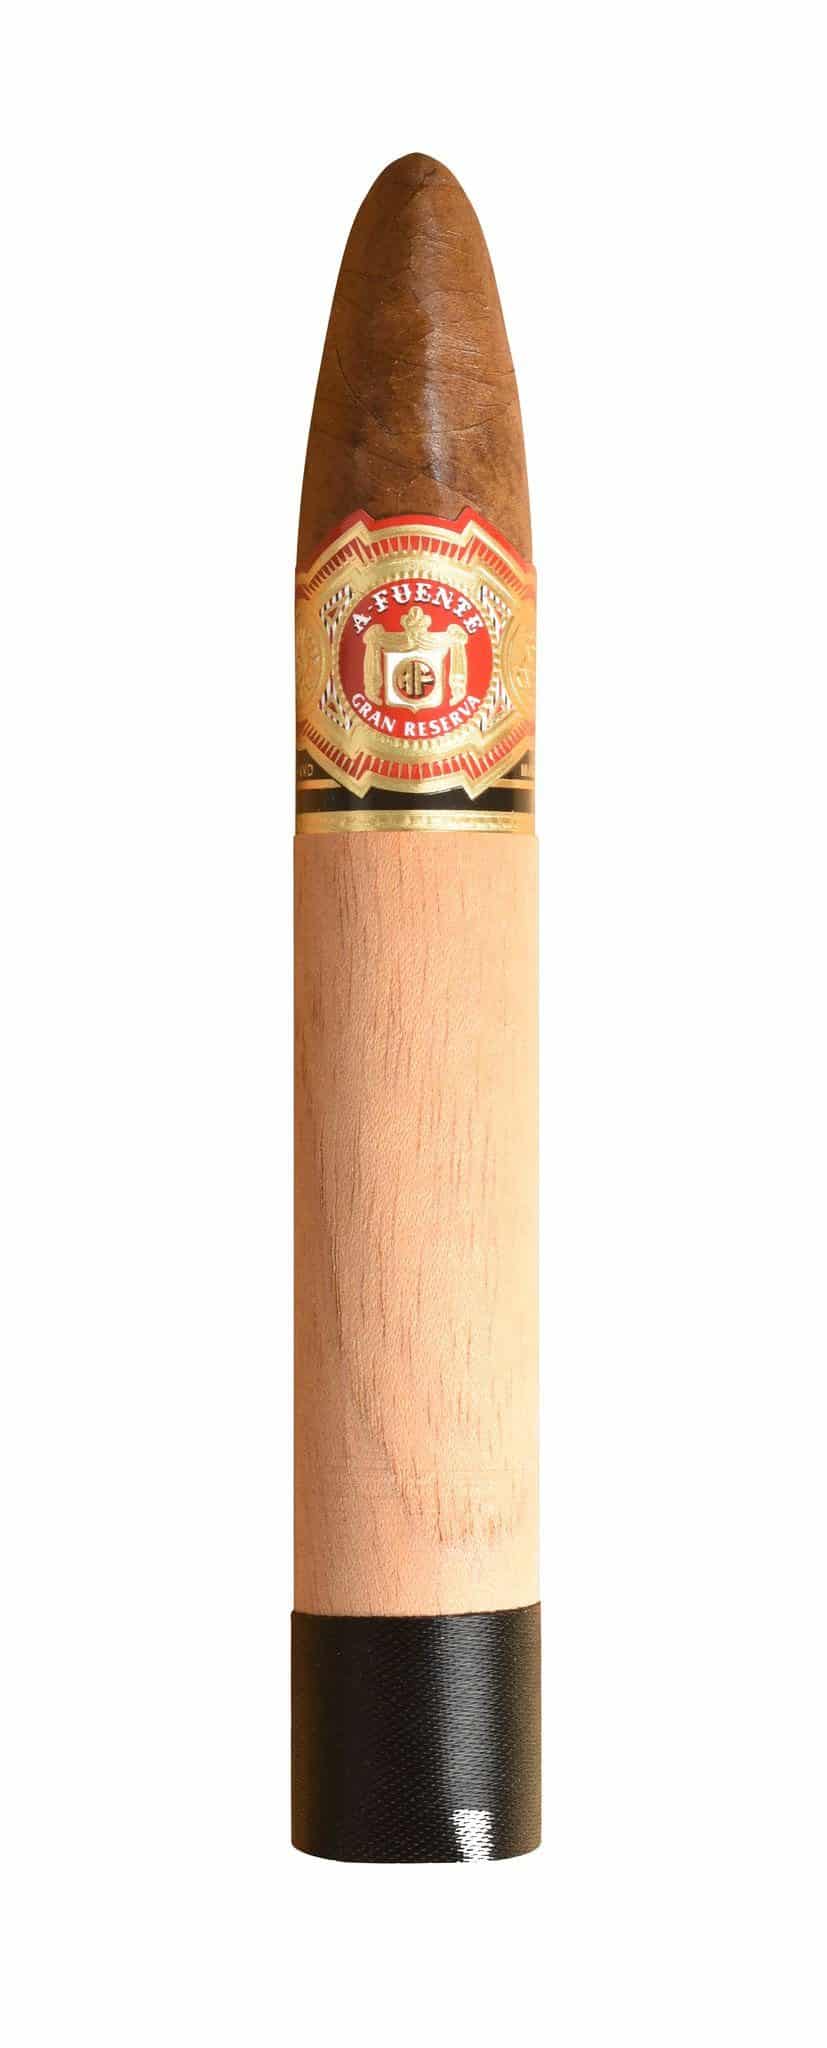 Single Arturo Fuente Chateau King B Sungrown cigar